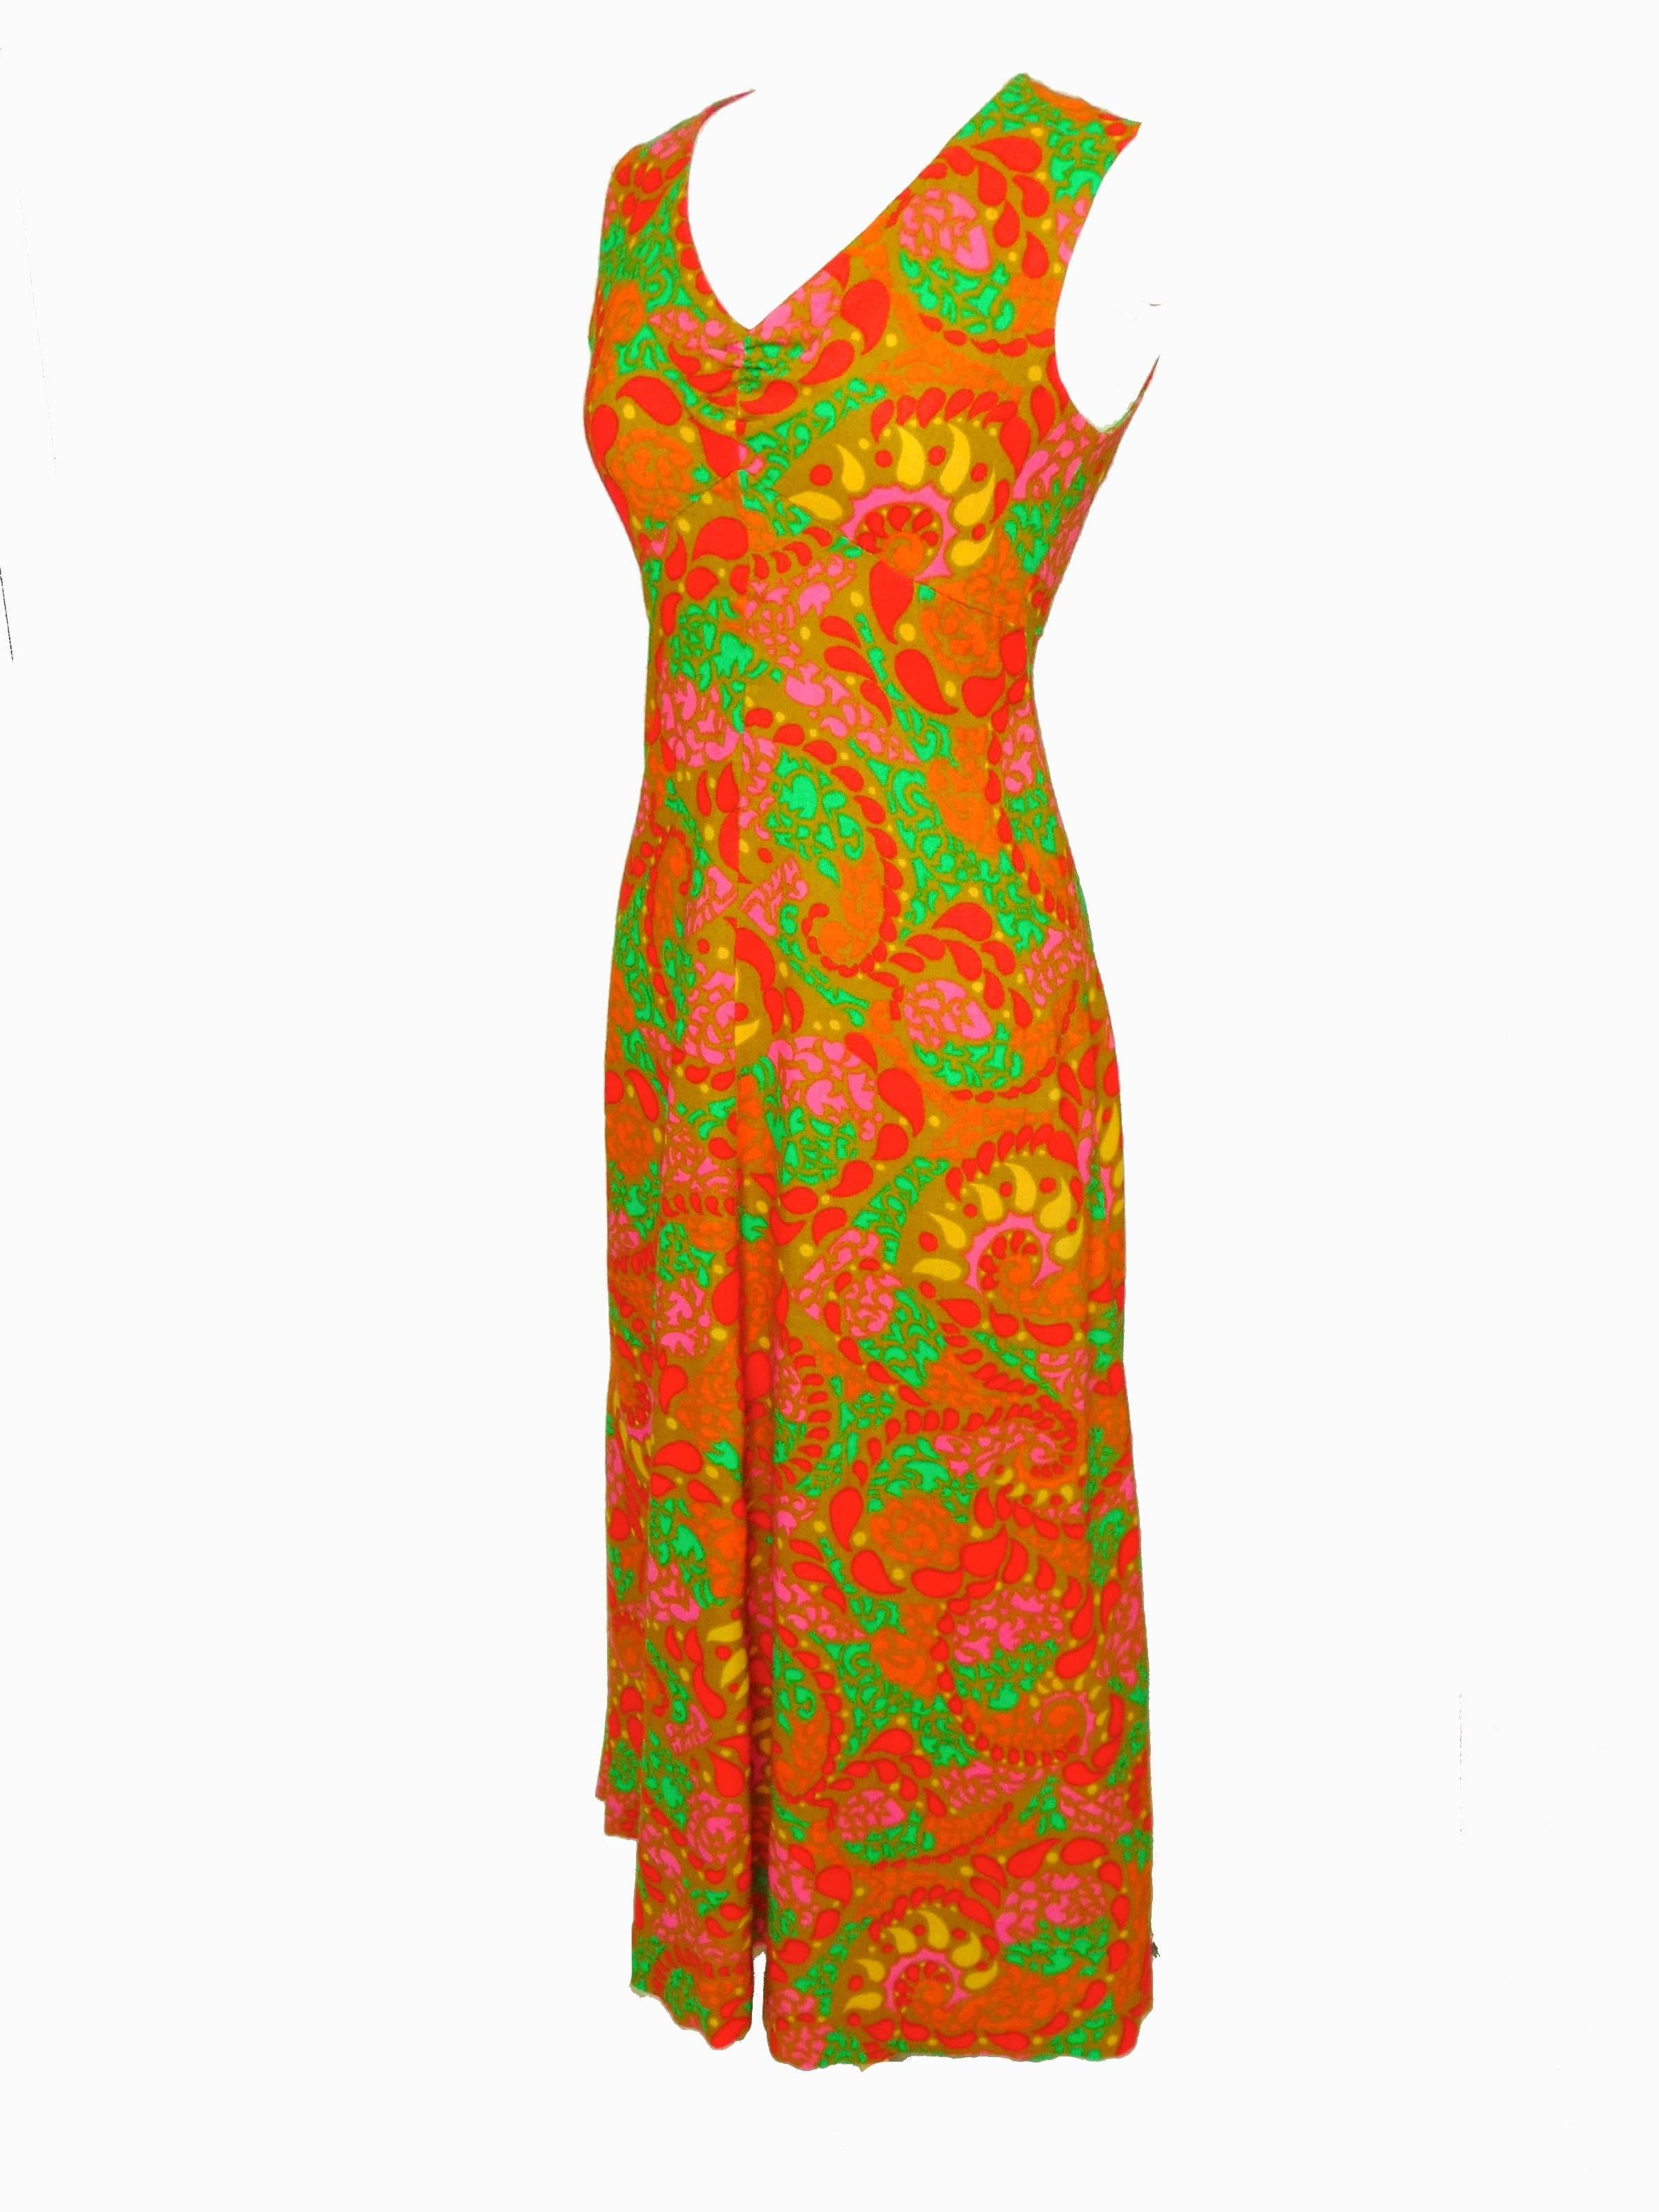 Vibrant Summer Dress With Abstract Print Maxi Schwartz Liebman Textiles ...